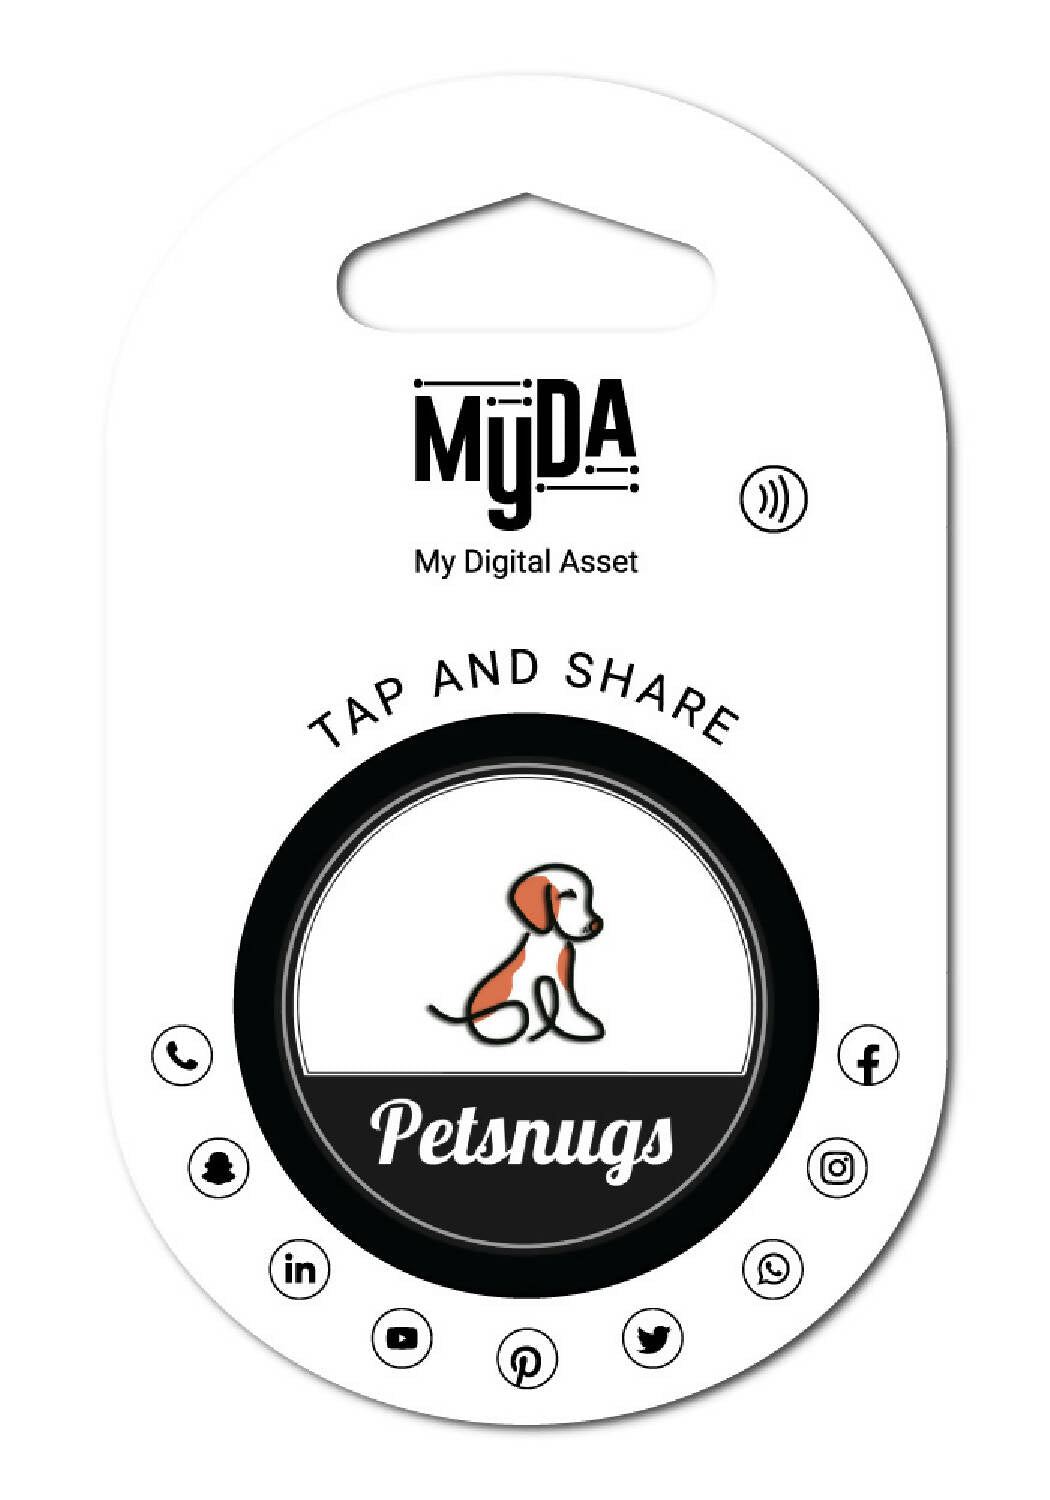 Petsnugs x Myda - NFC Tags for Dogs & Cats